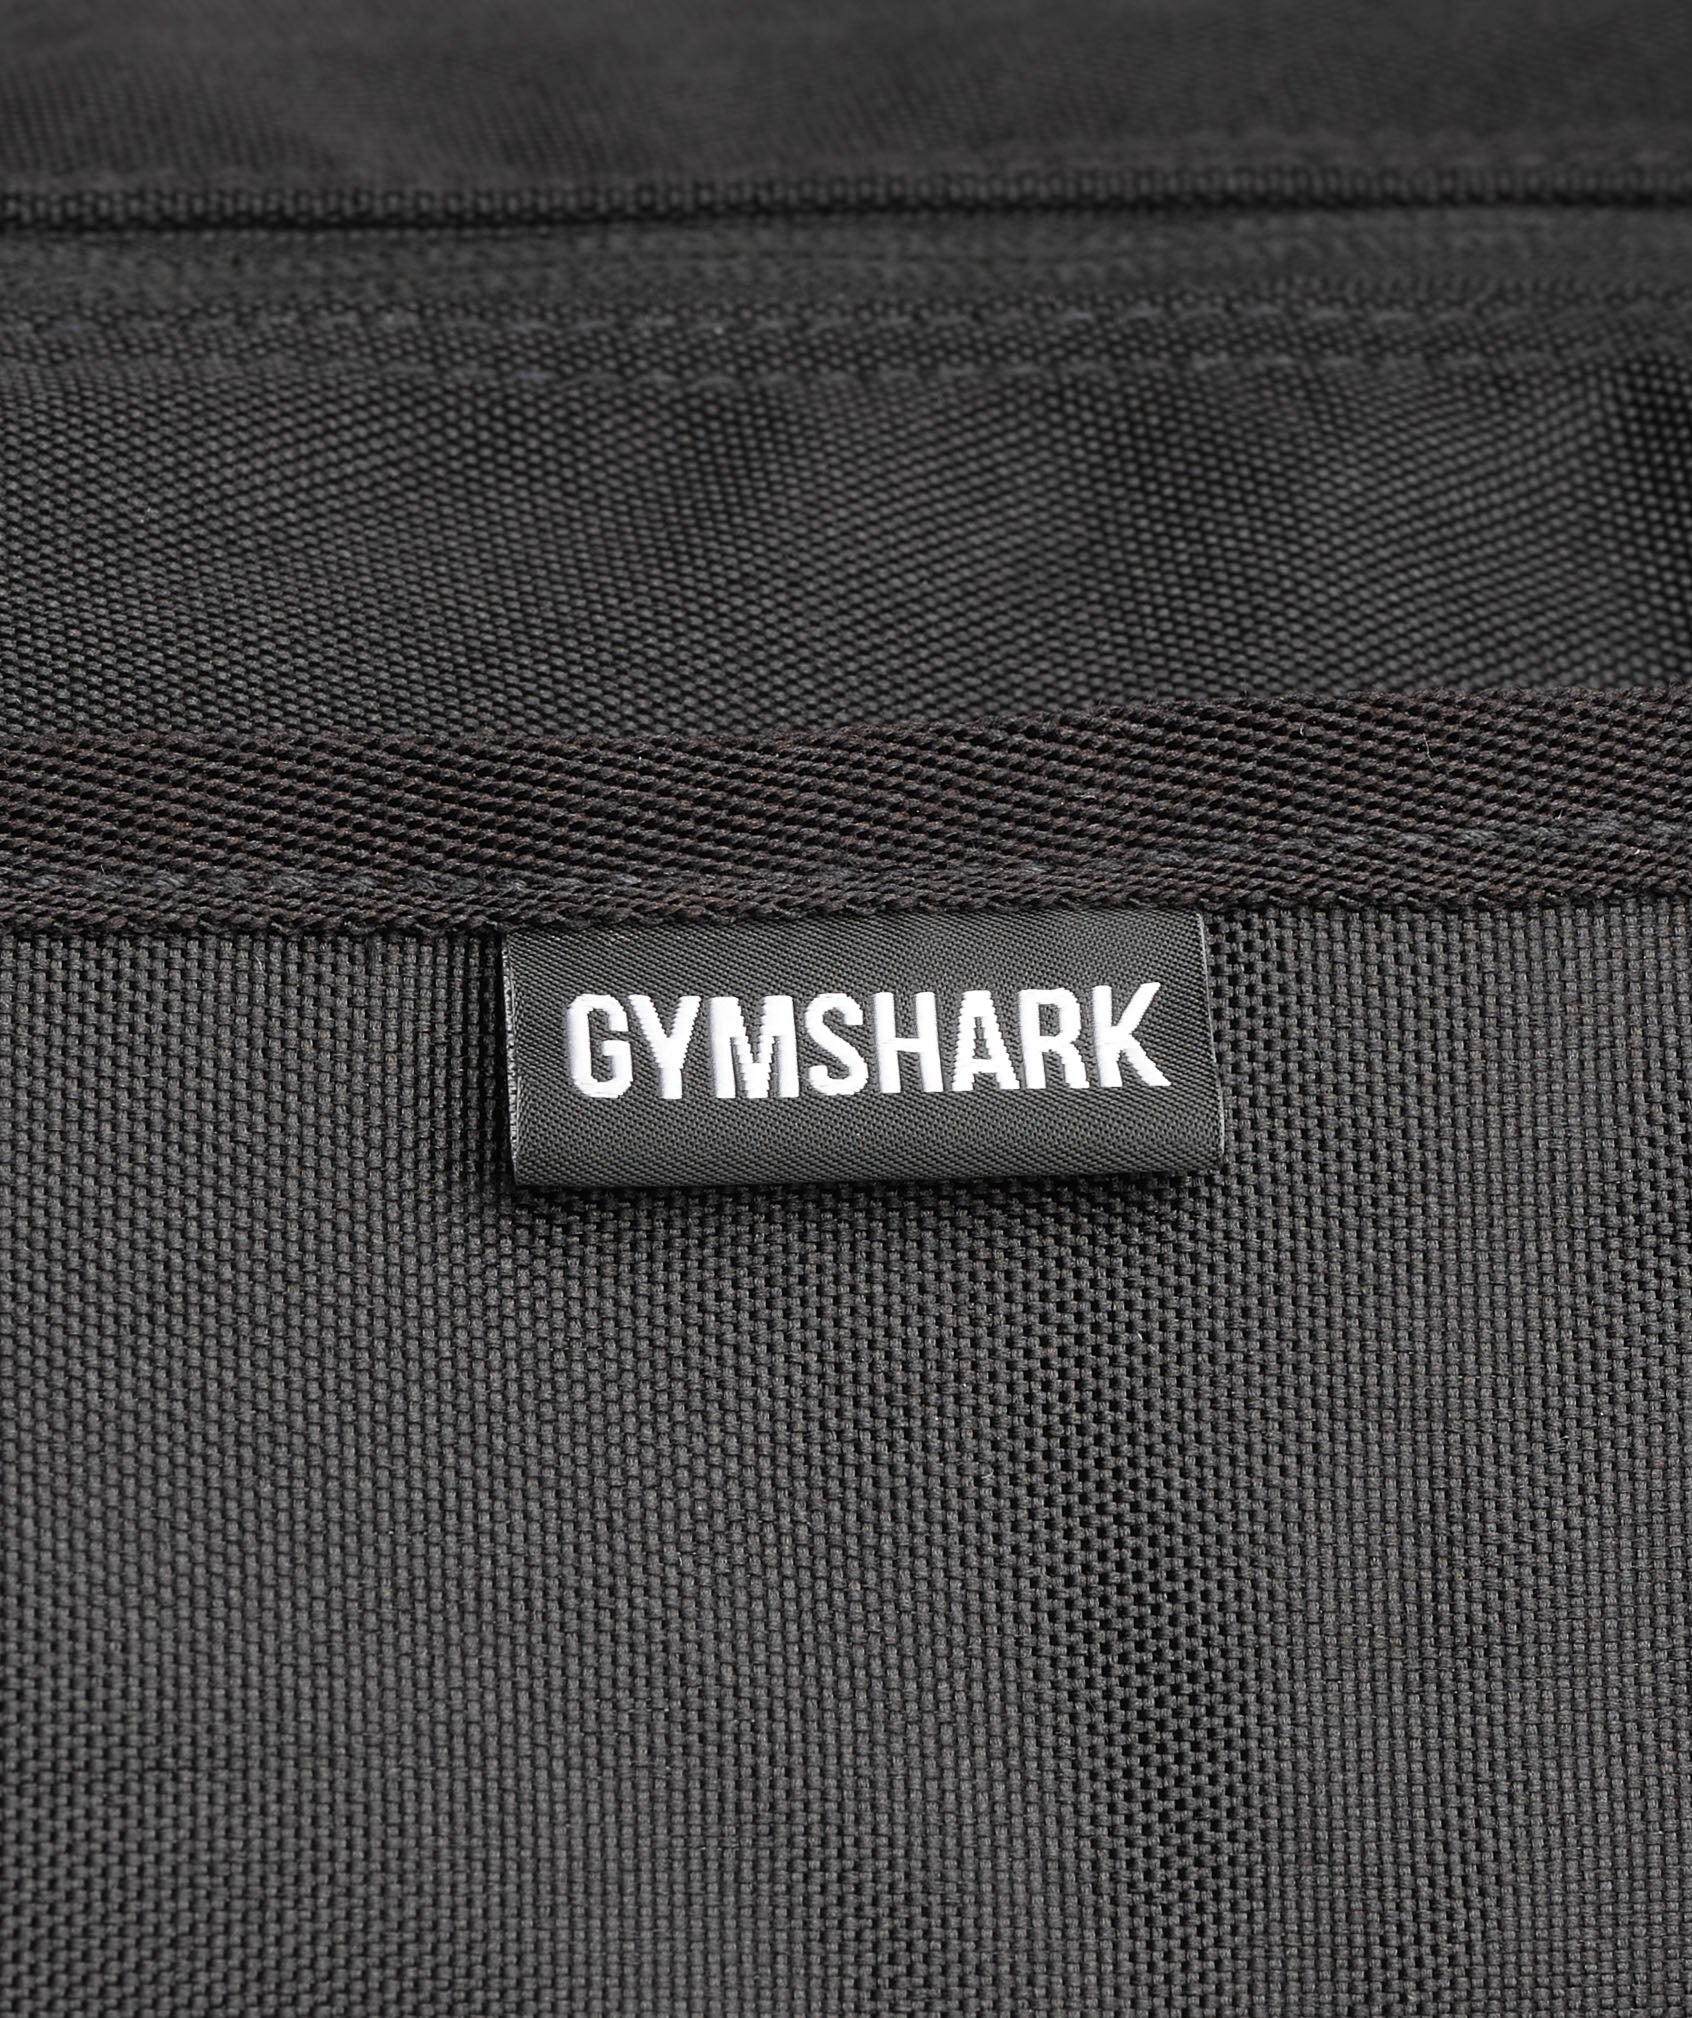 Sharkhead Gym Bag in Black - view 3